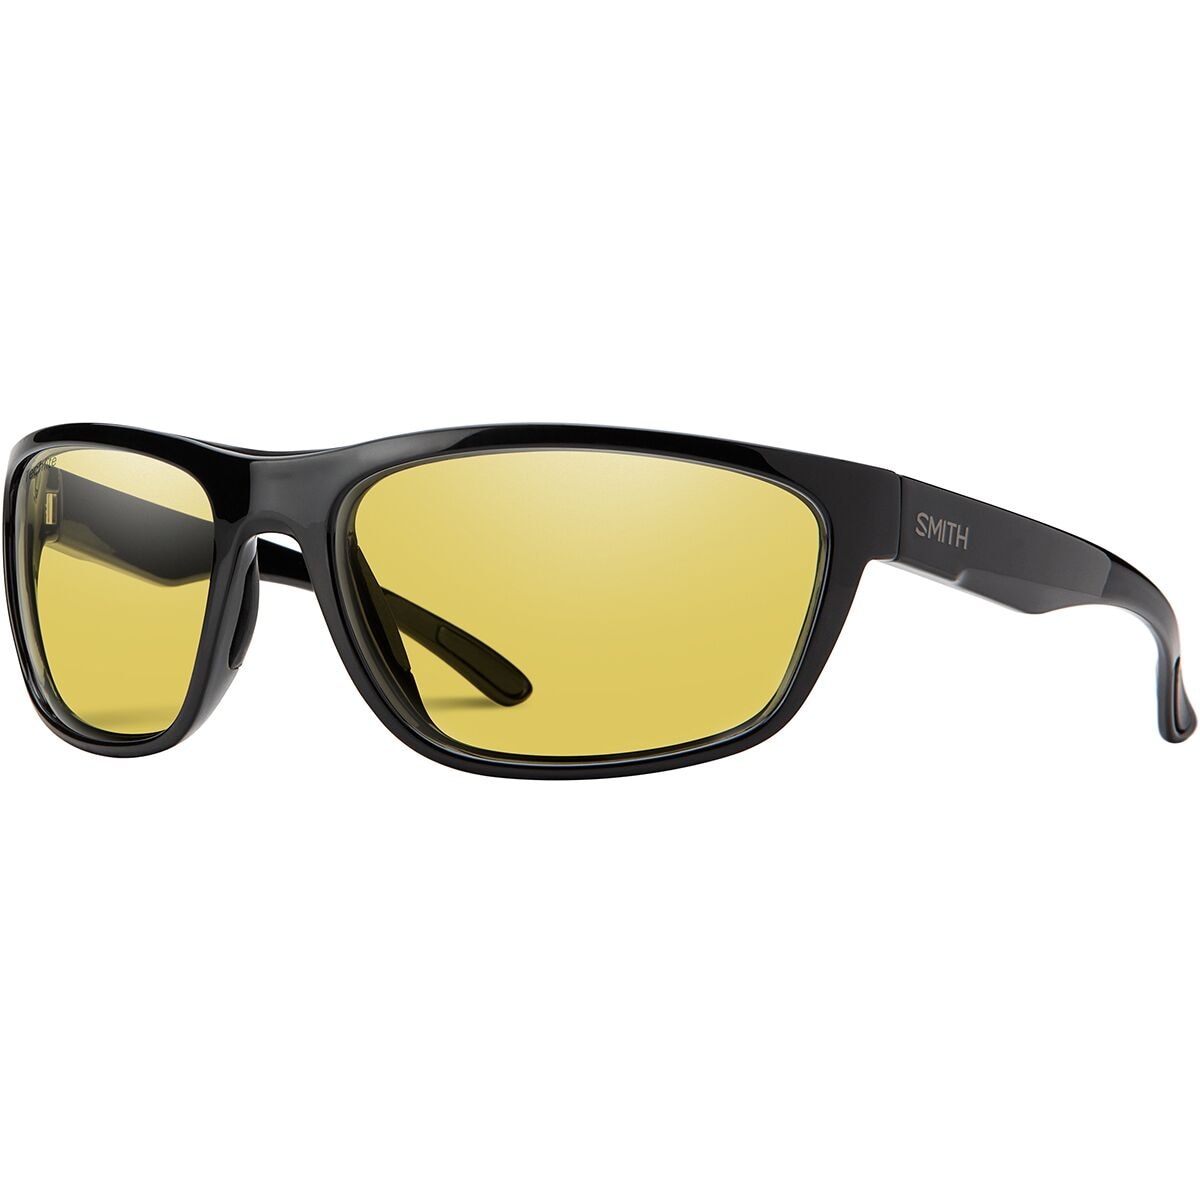 Smith Redding Polarized Sunglasses - Men's